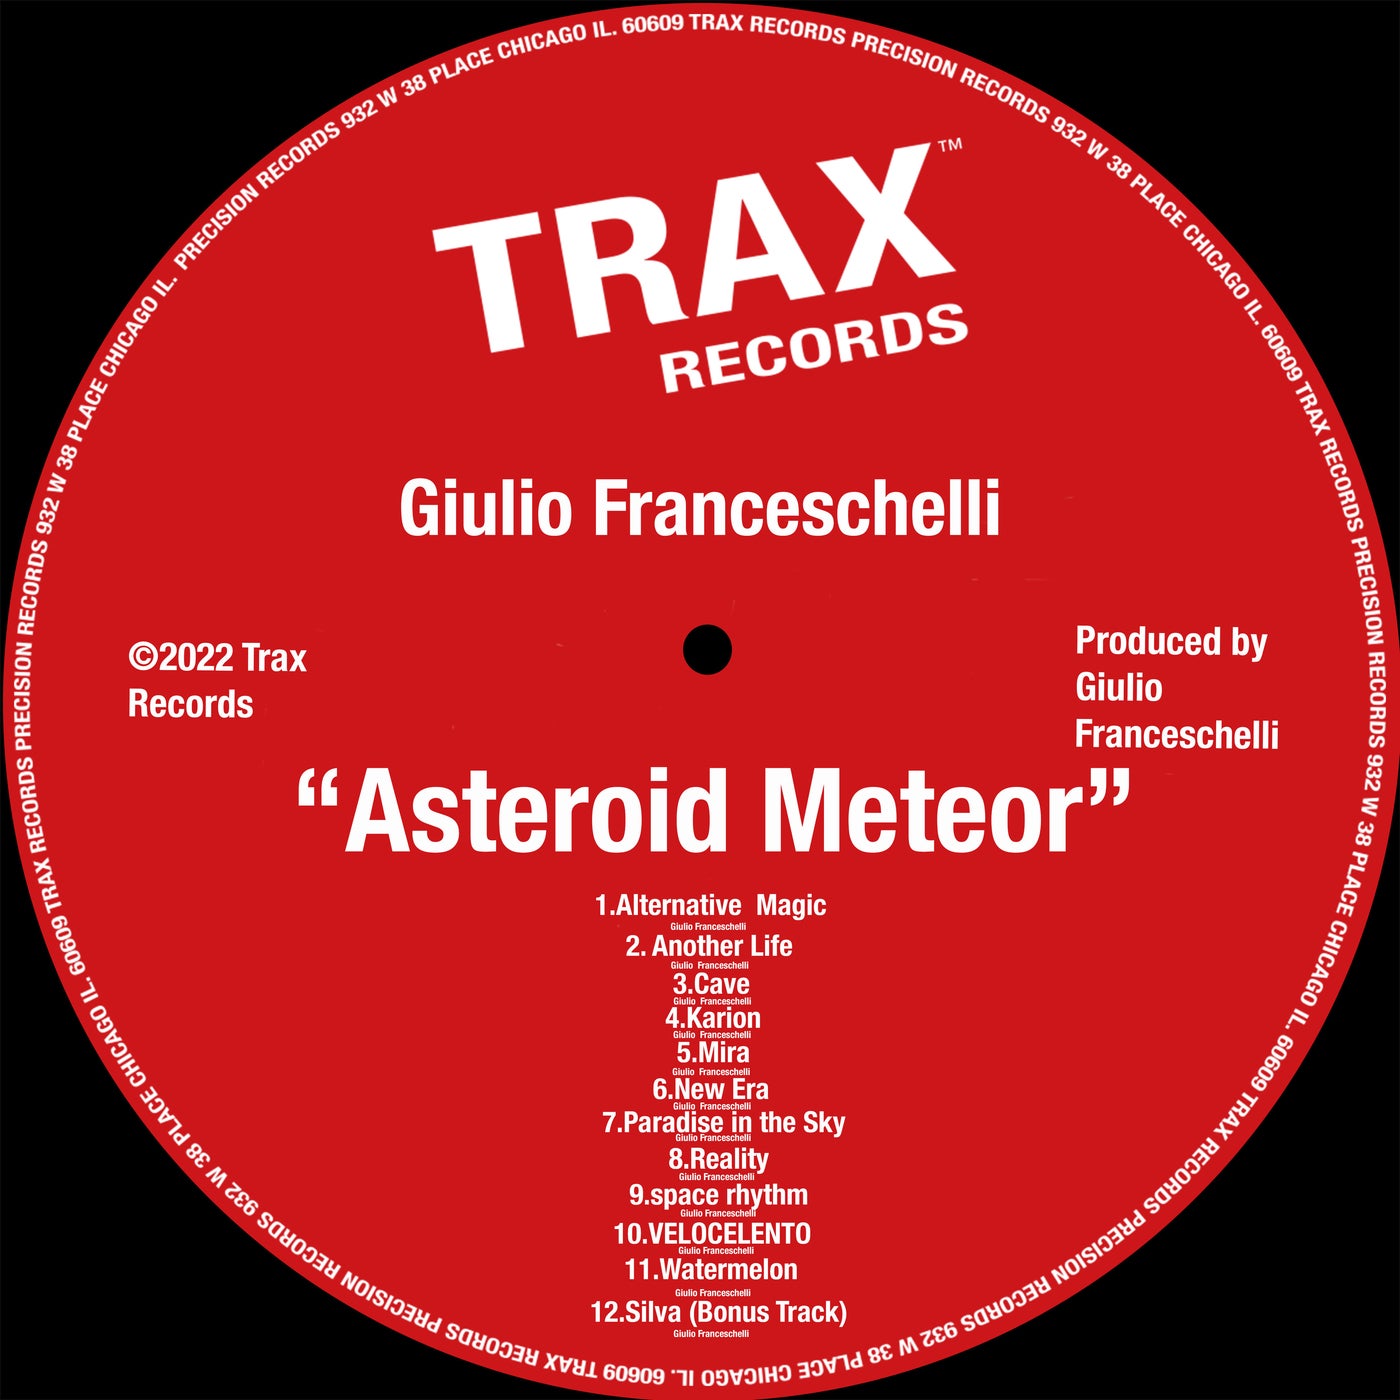 Asteroid Meteor